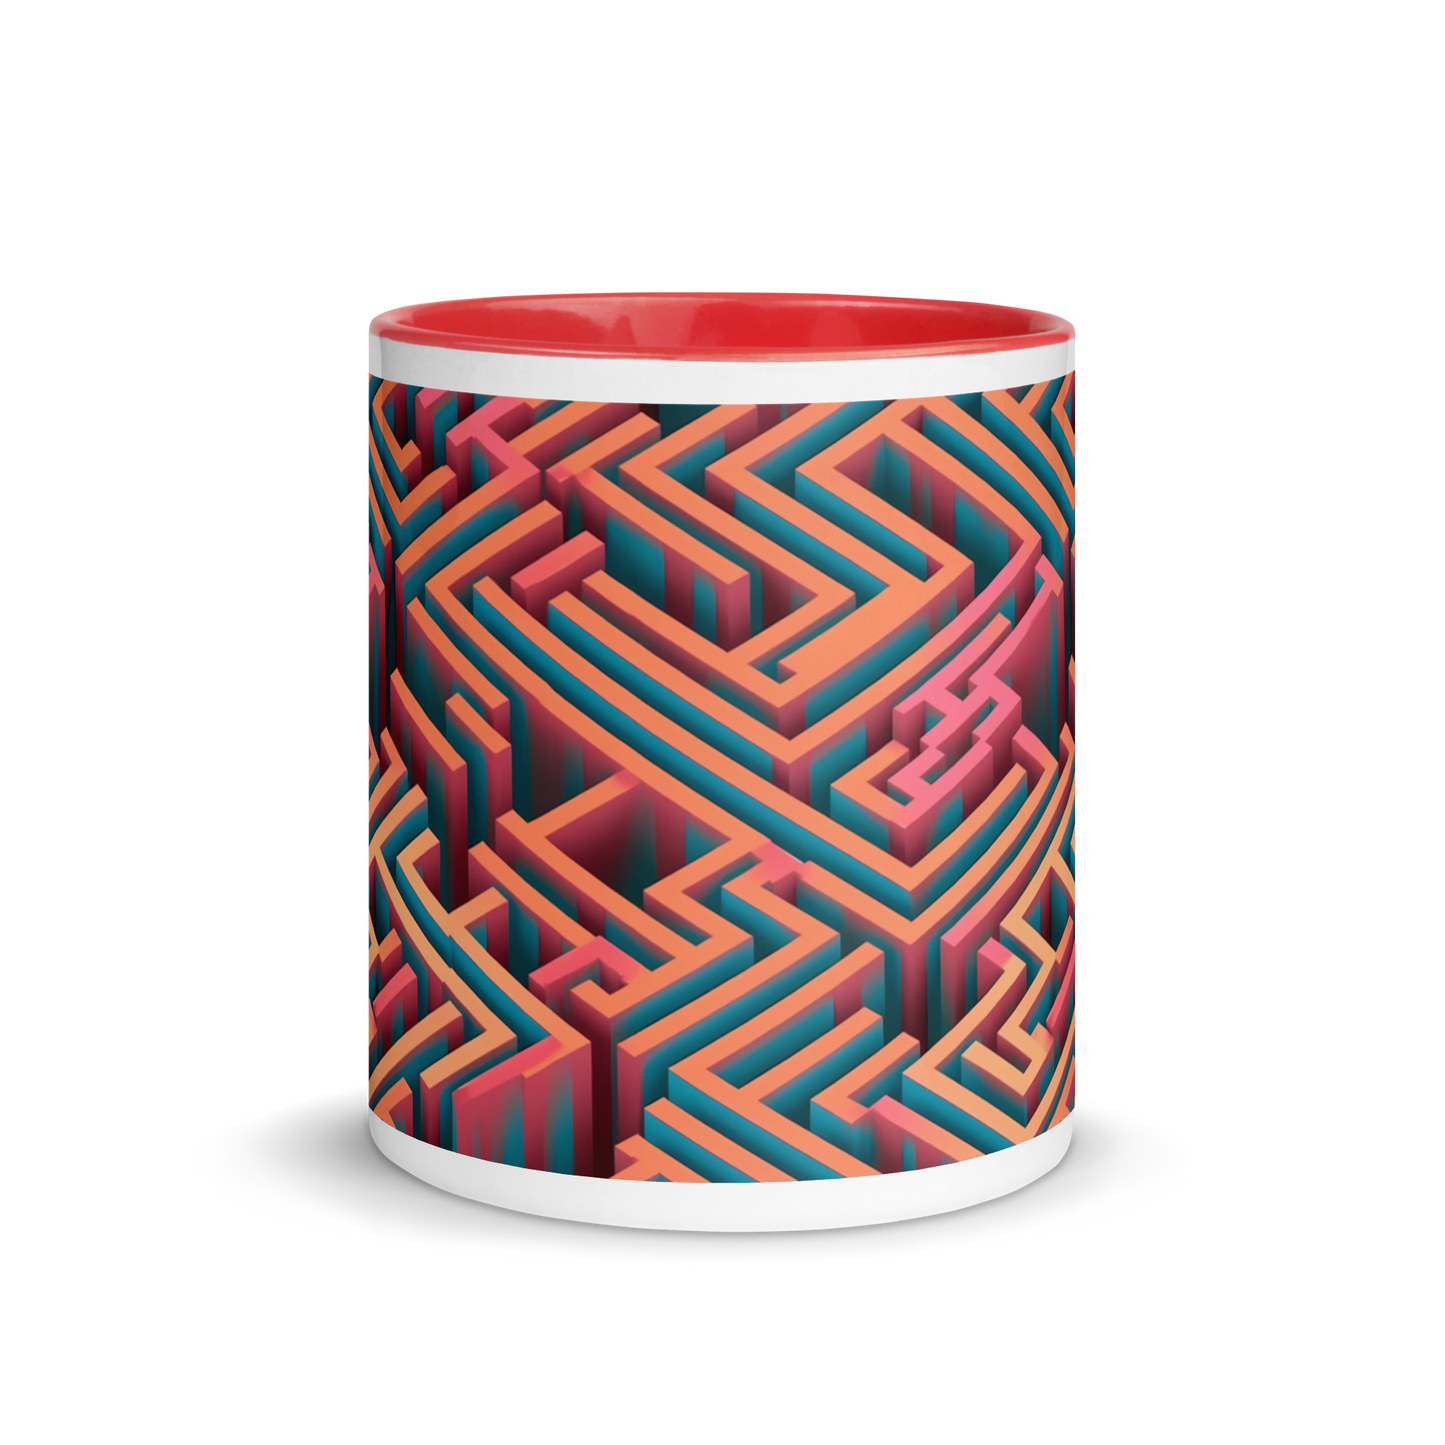 3D Maze Illusion | 3D Patterns | White Ceramic Mug with Color Inside - #1